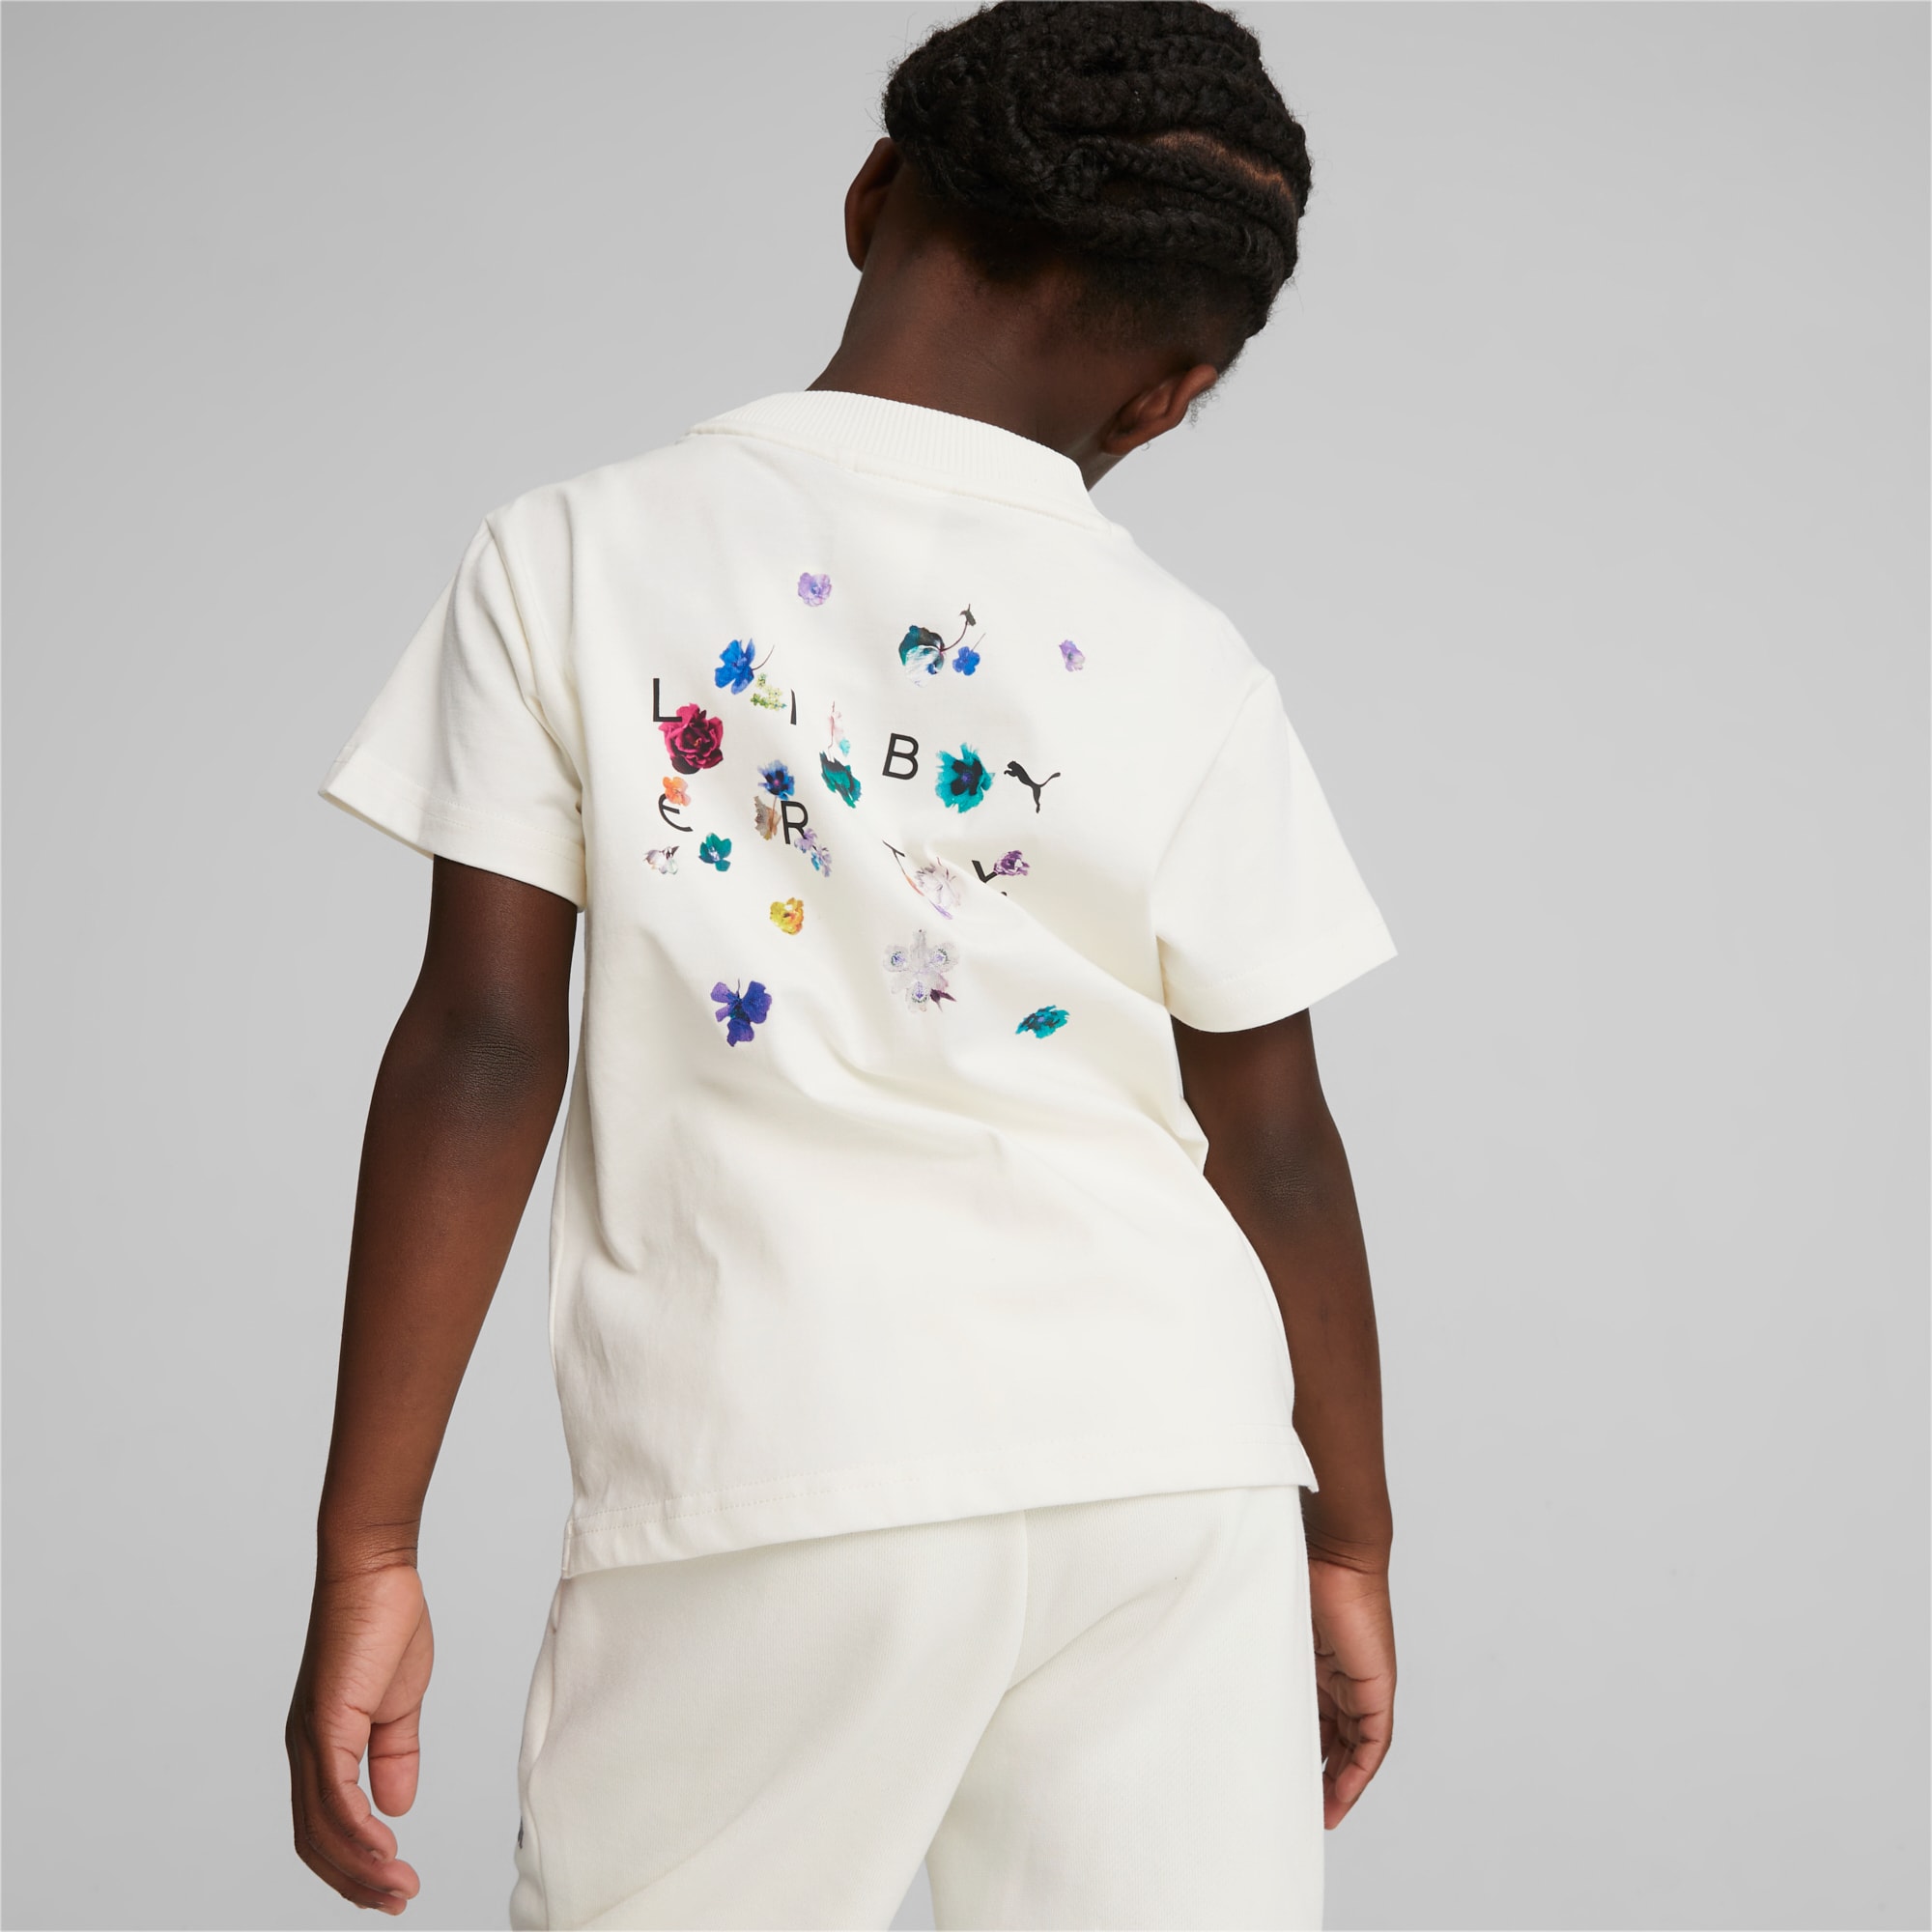 PUMA X Liberty Kids' Graphic T-Shirt, Warm White